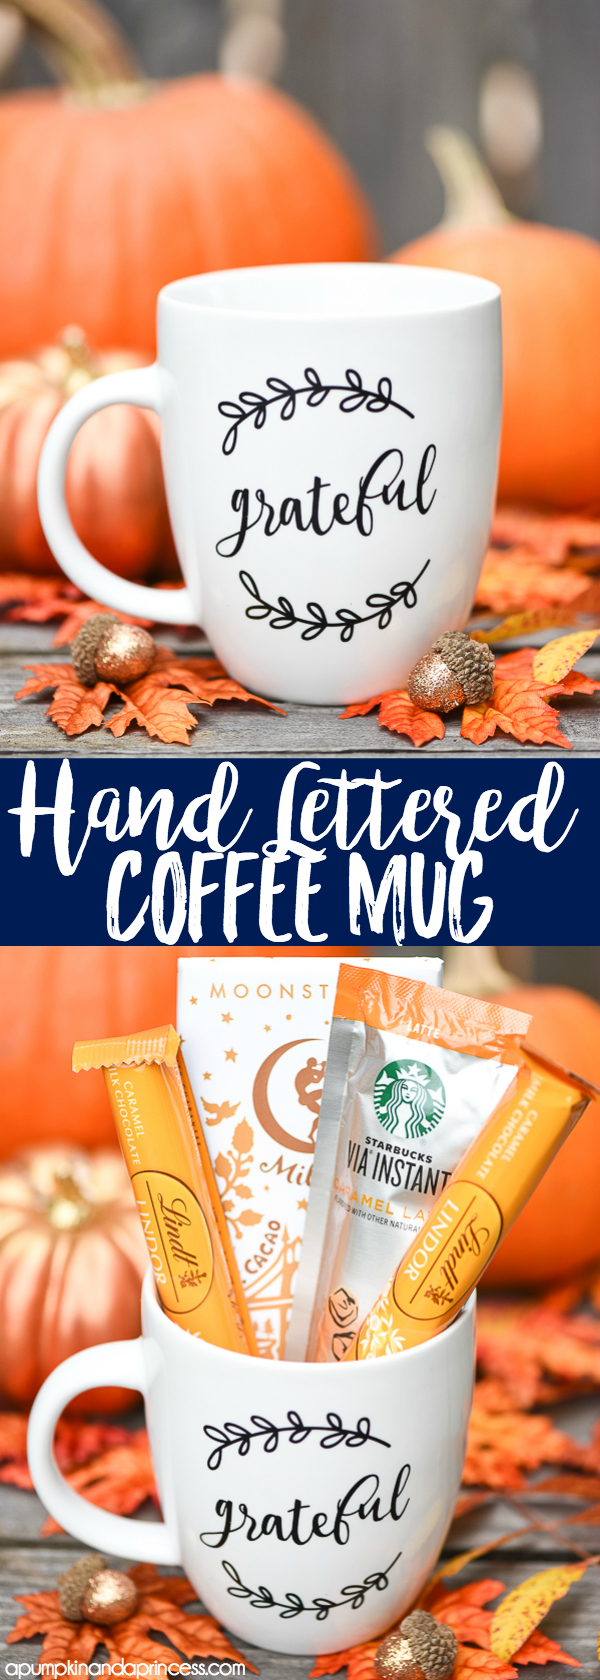 Hand-lettered-Coffee-Mug